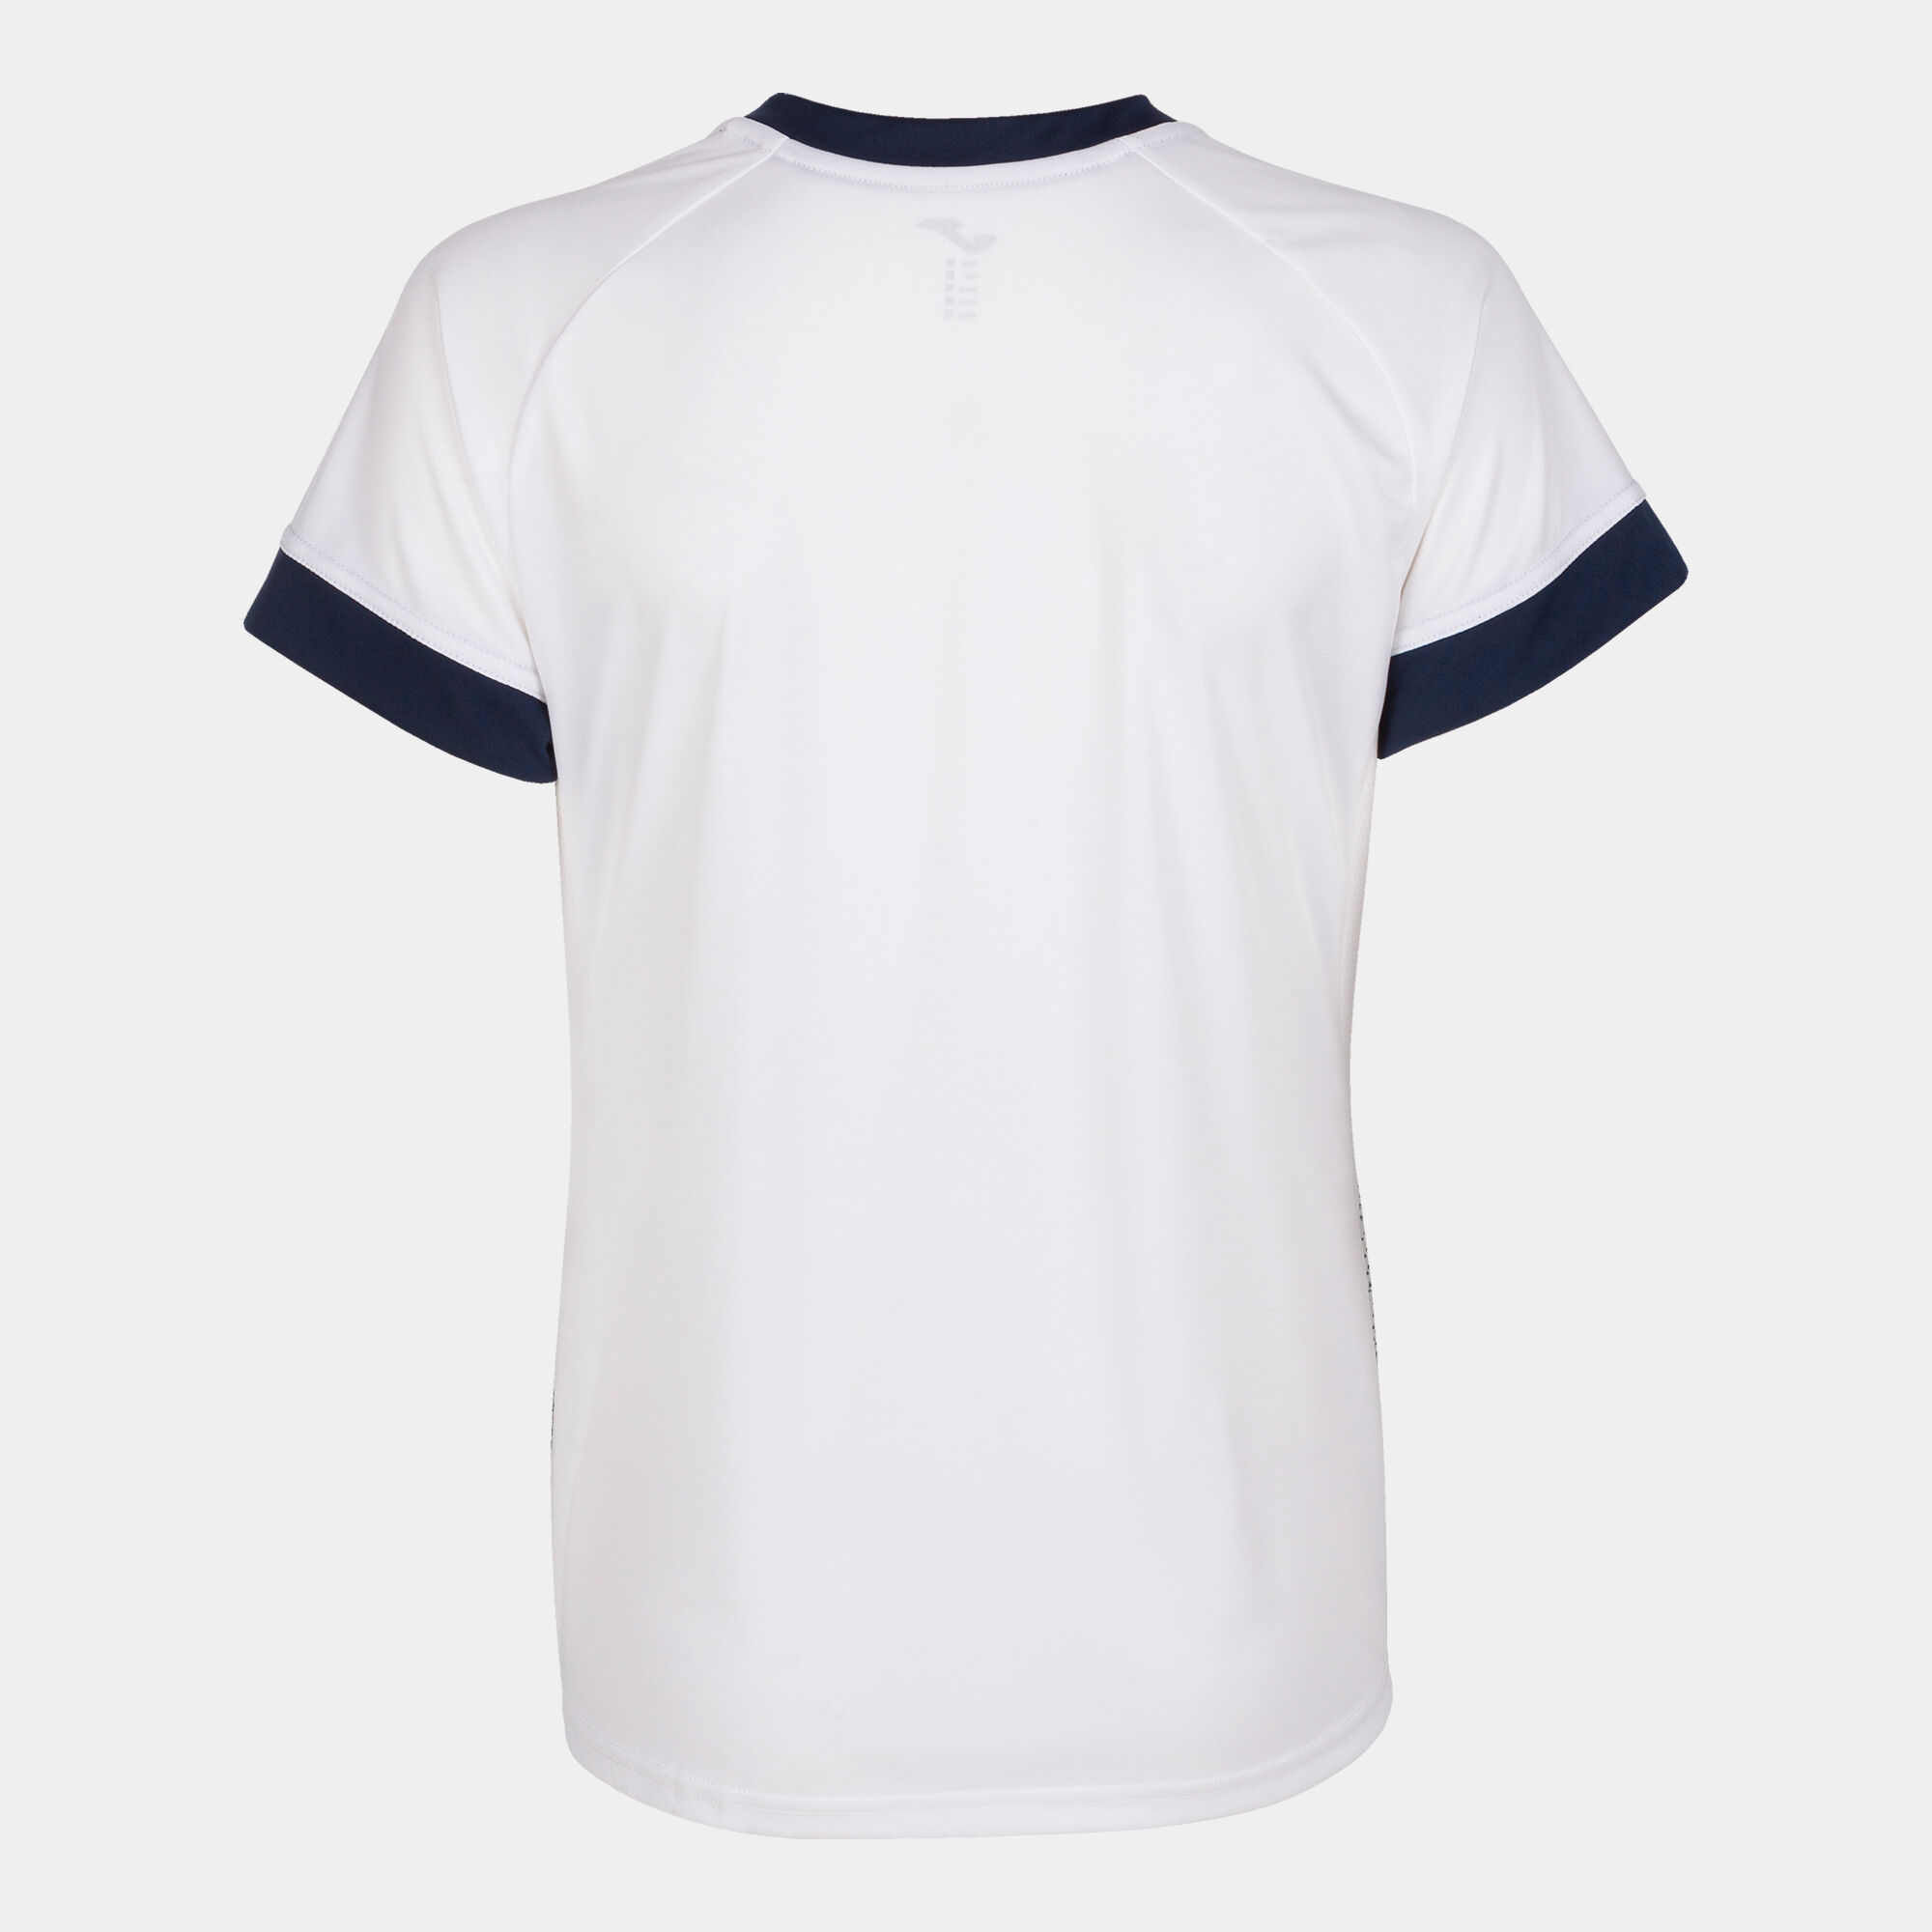 Camiseta manga corta mujer Supernova III blanco marino